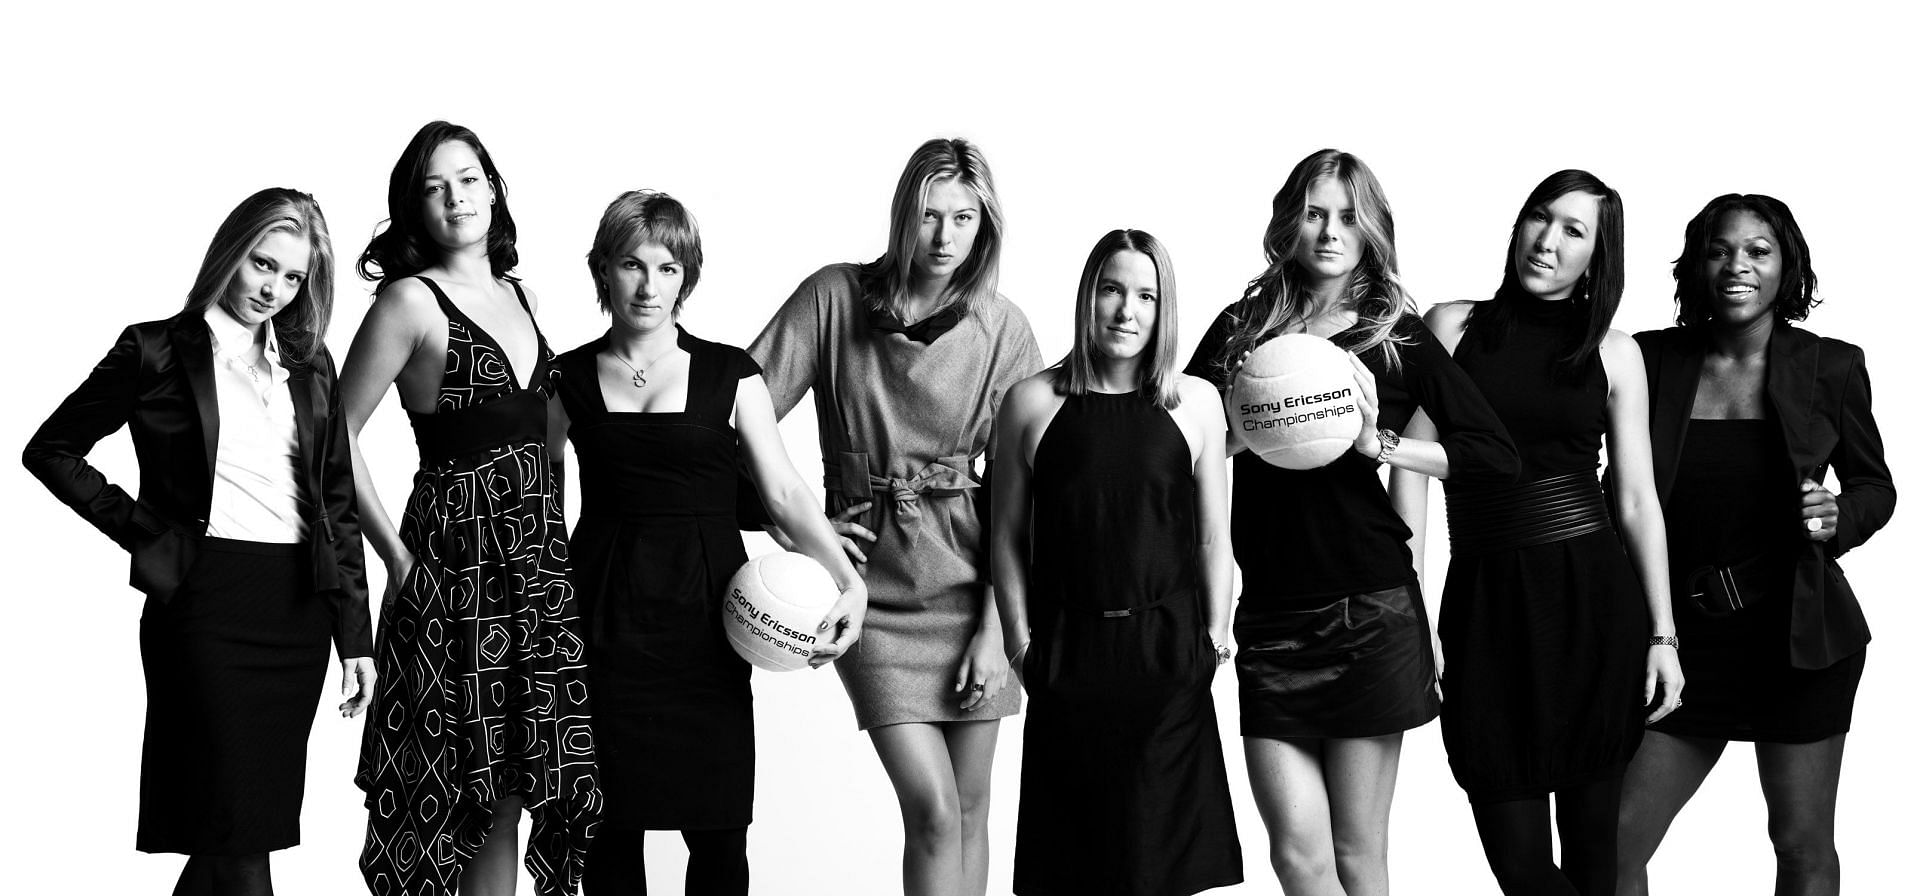 Players at the Sony Ericsson WTA Championship photoshoot.